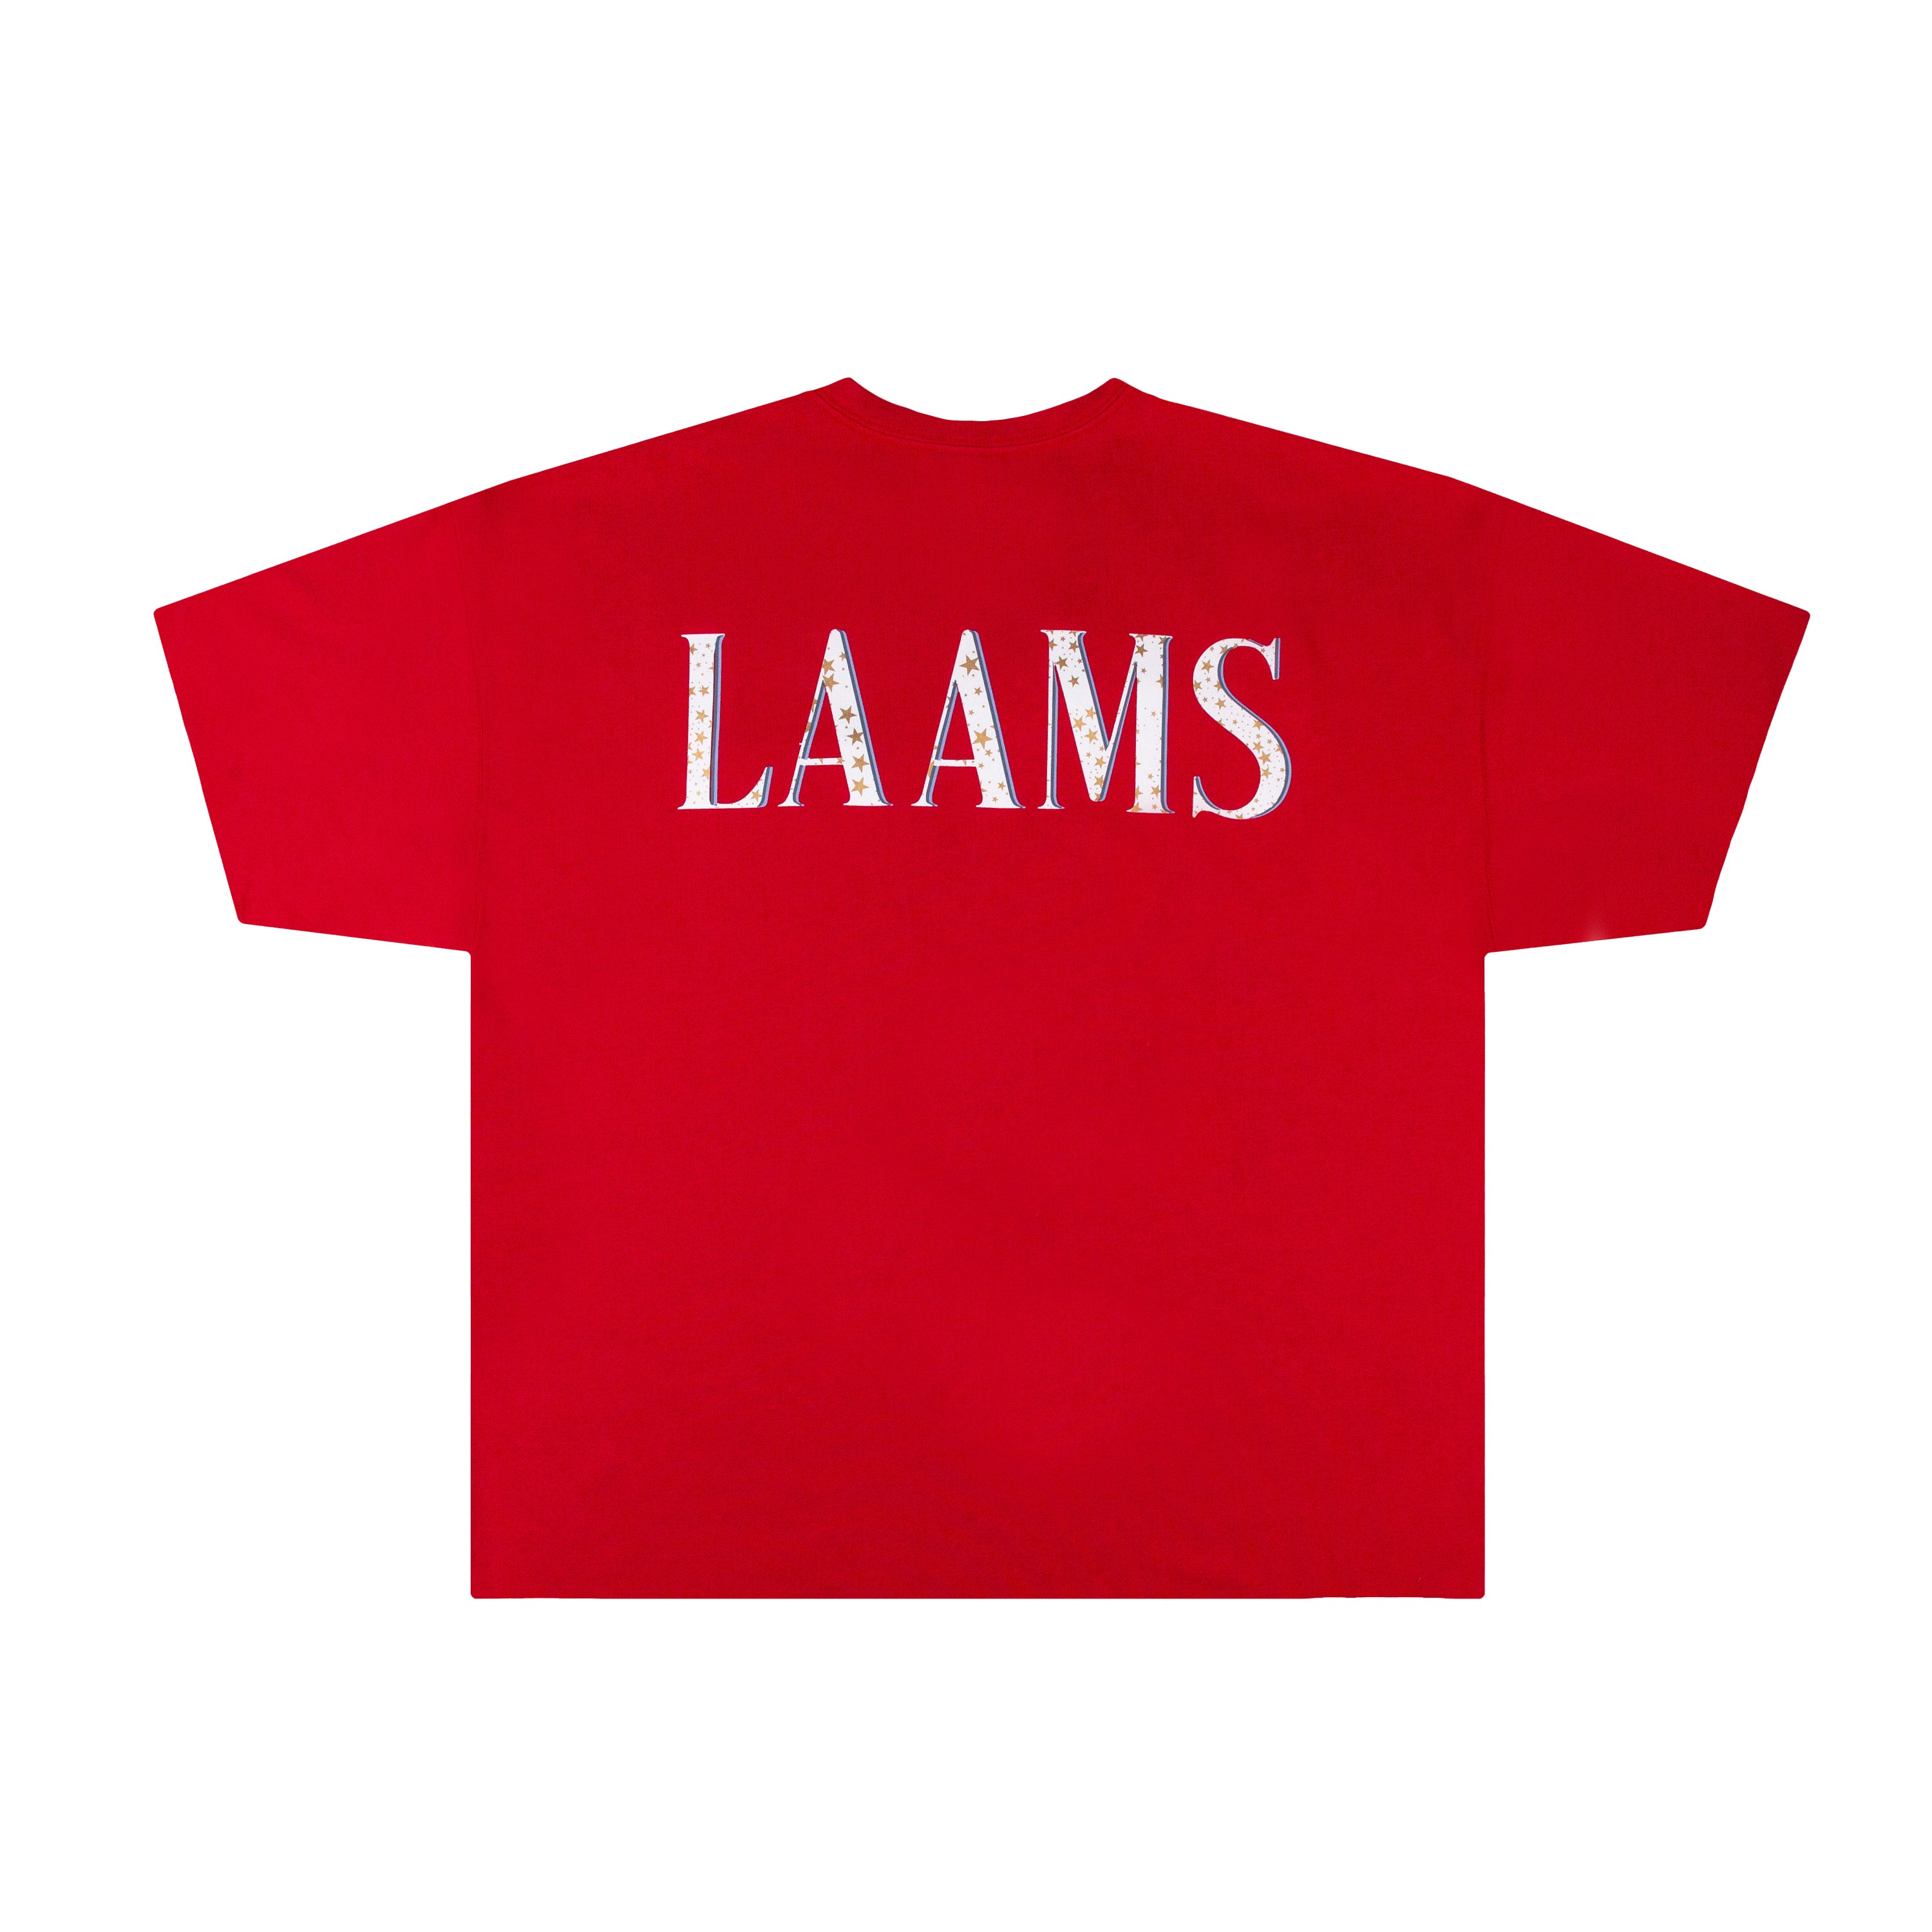 SHOP ALL – Laams